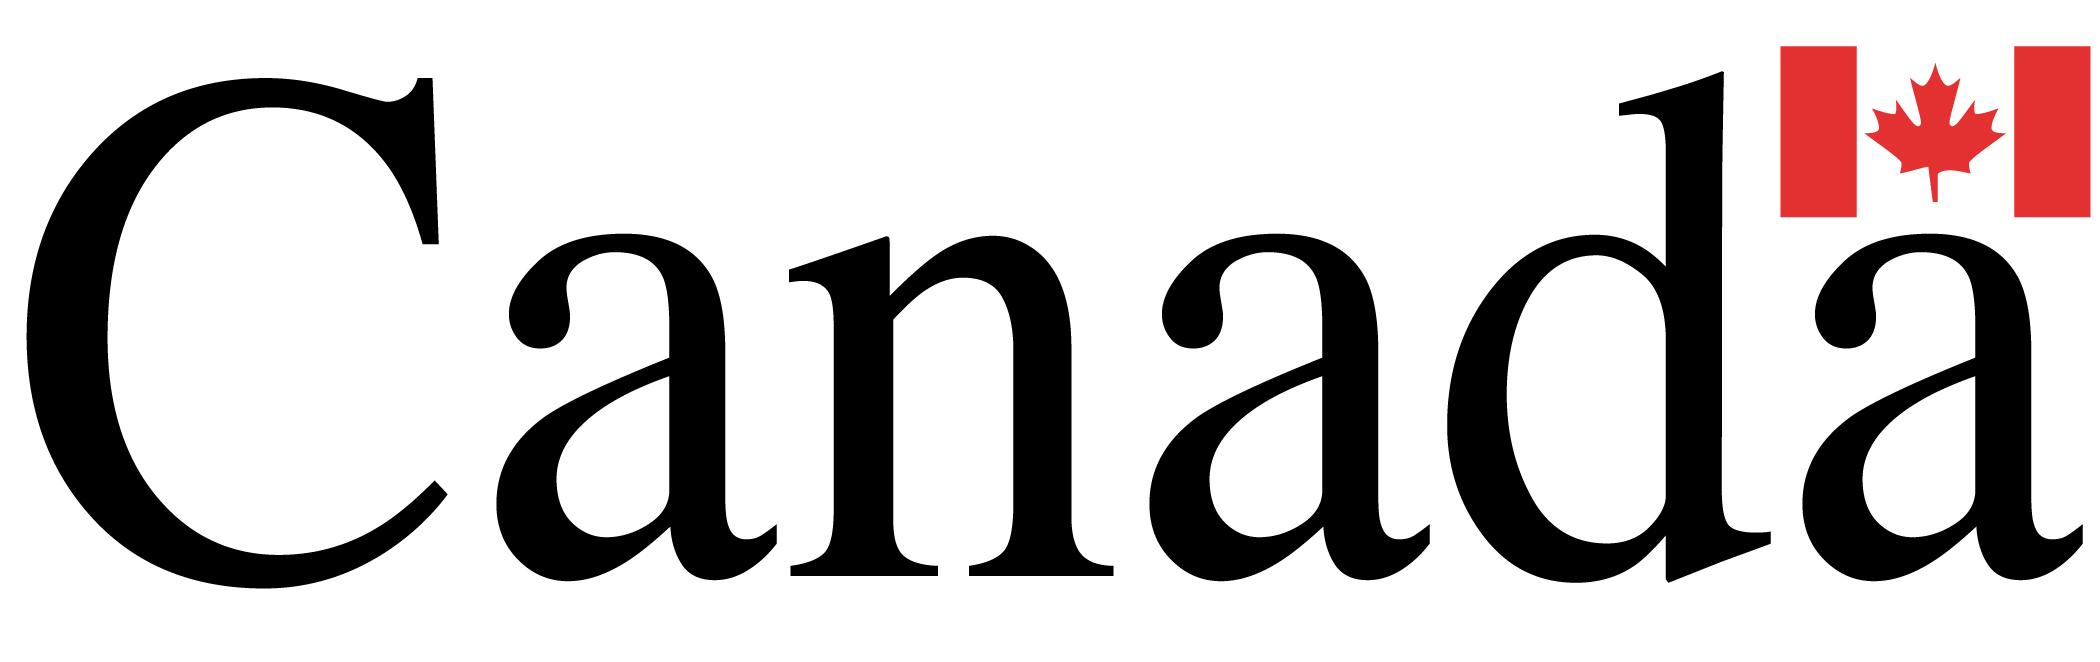 Canada Logo - canada-logo - Connections Community Services